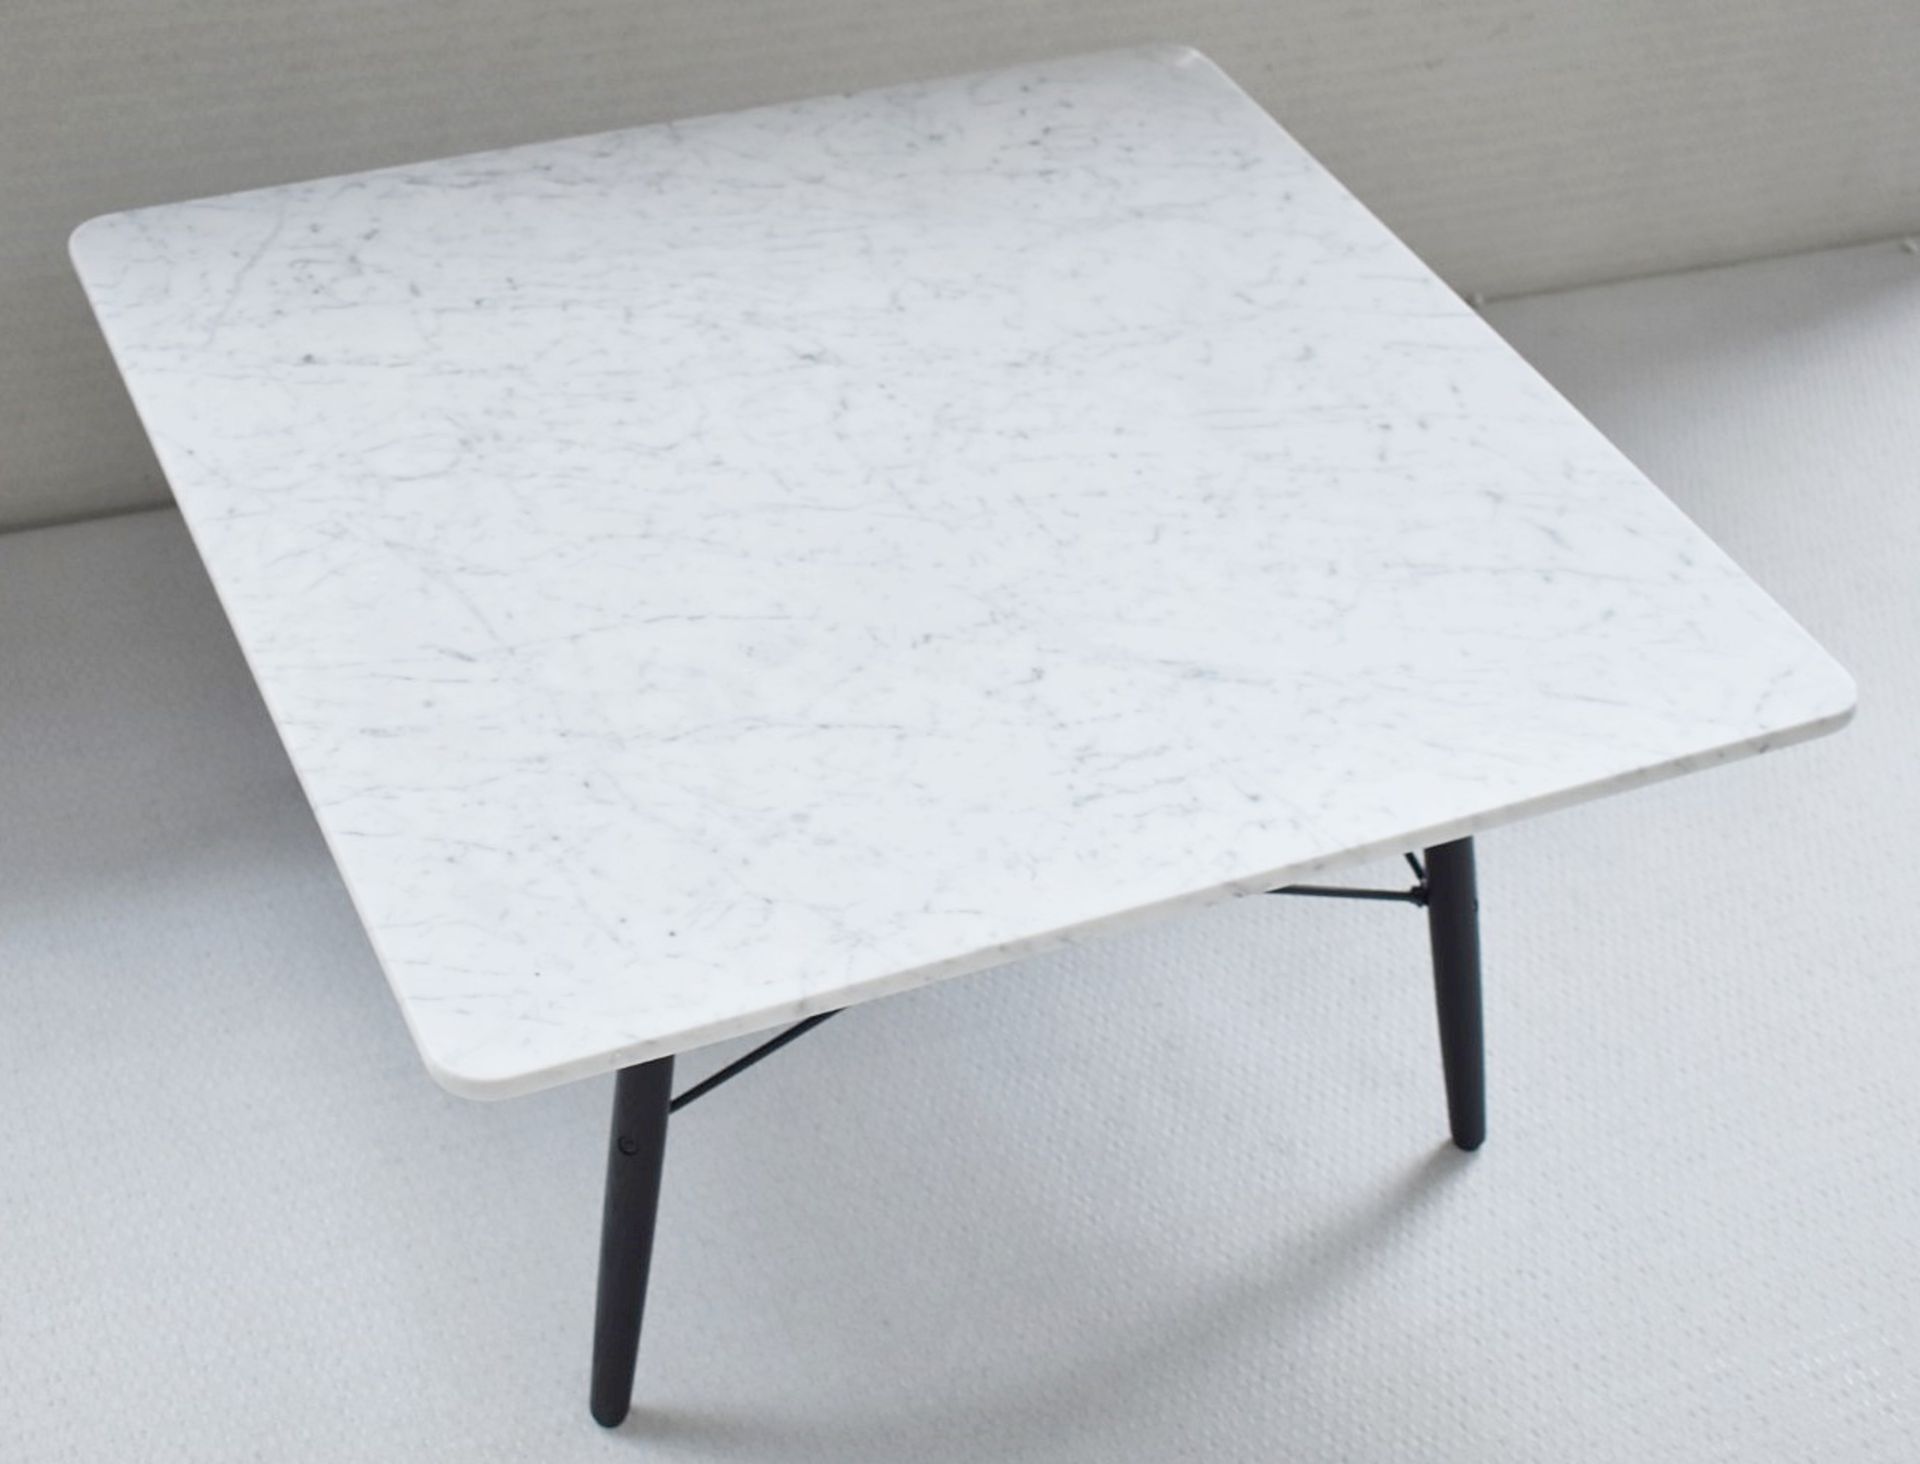 1 x VITRA Eames Marble-topped Square Coffee Table, 76x76 *Read Full Description* Original Price £1,7 - Bild 4 aus 6